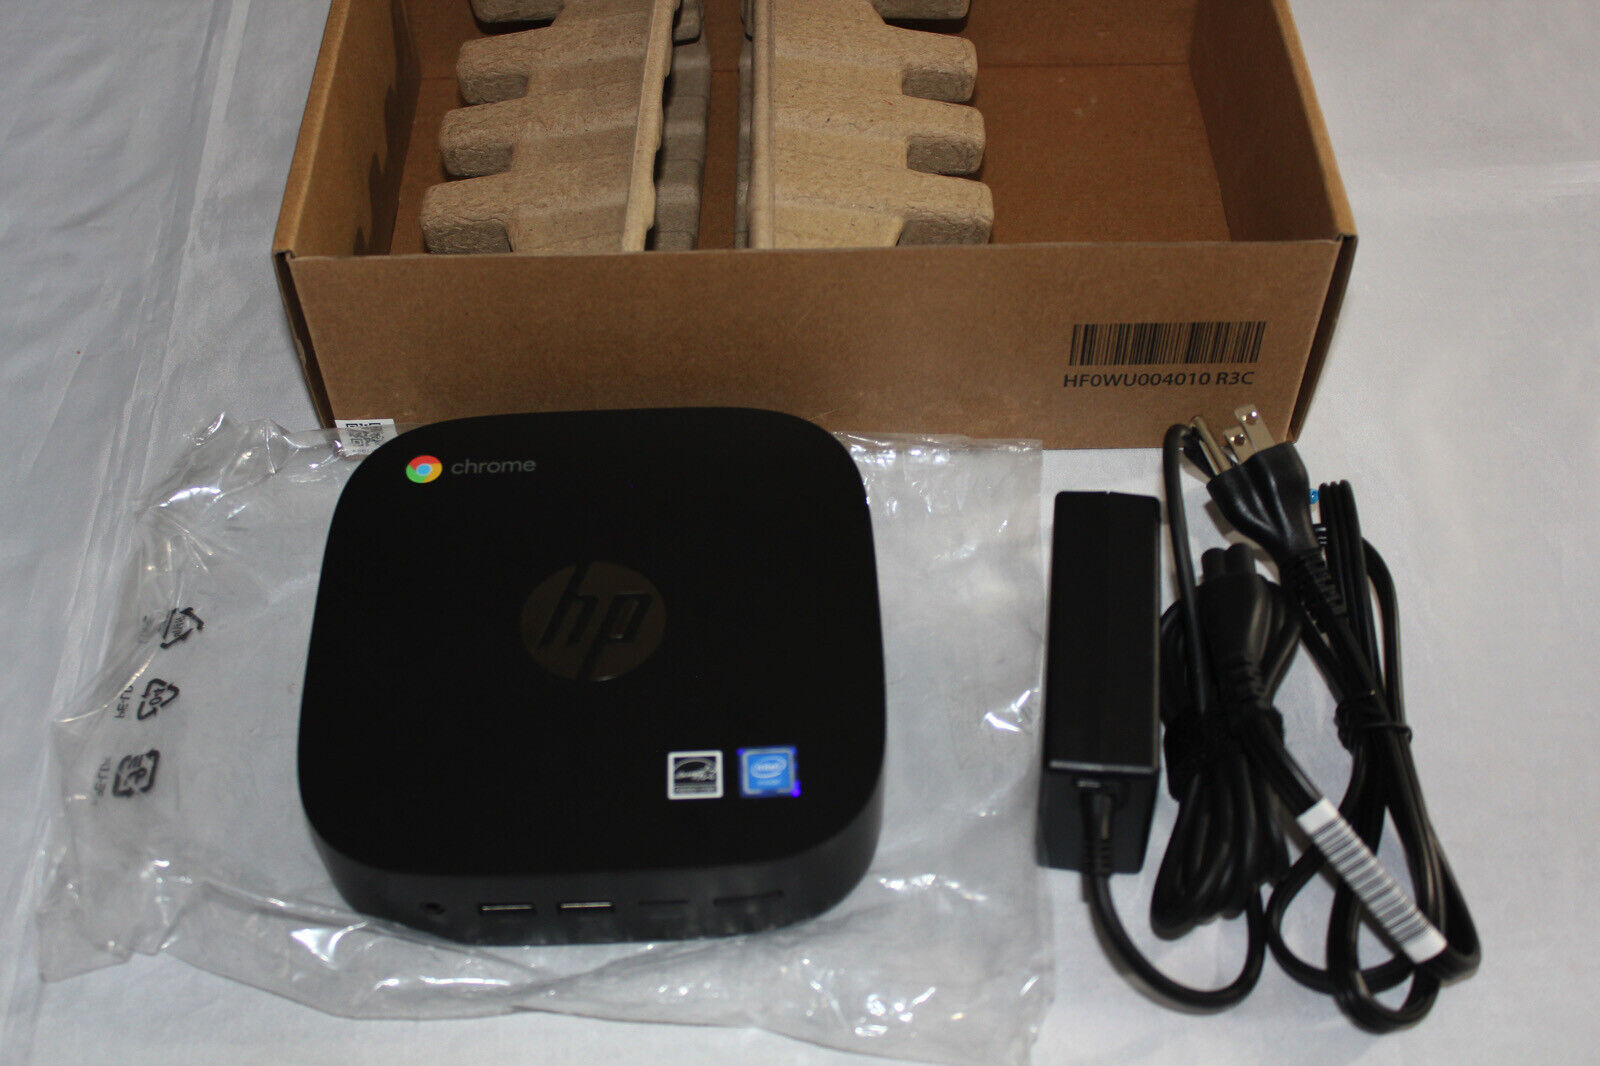 New HP Chromebox G3